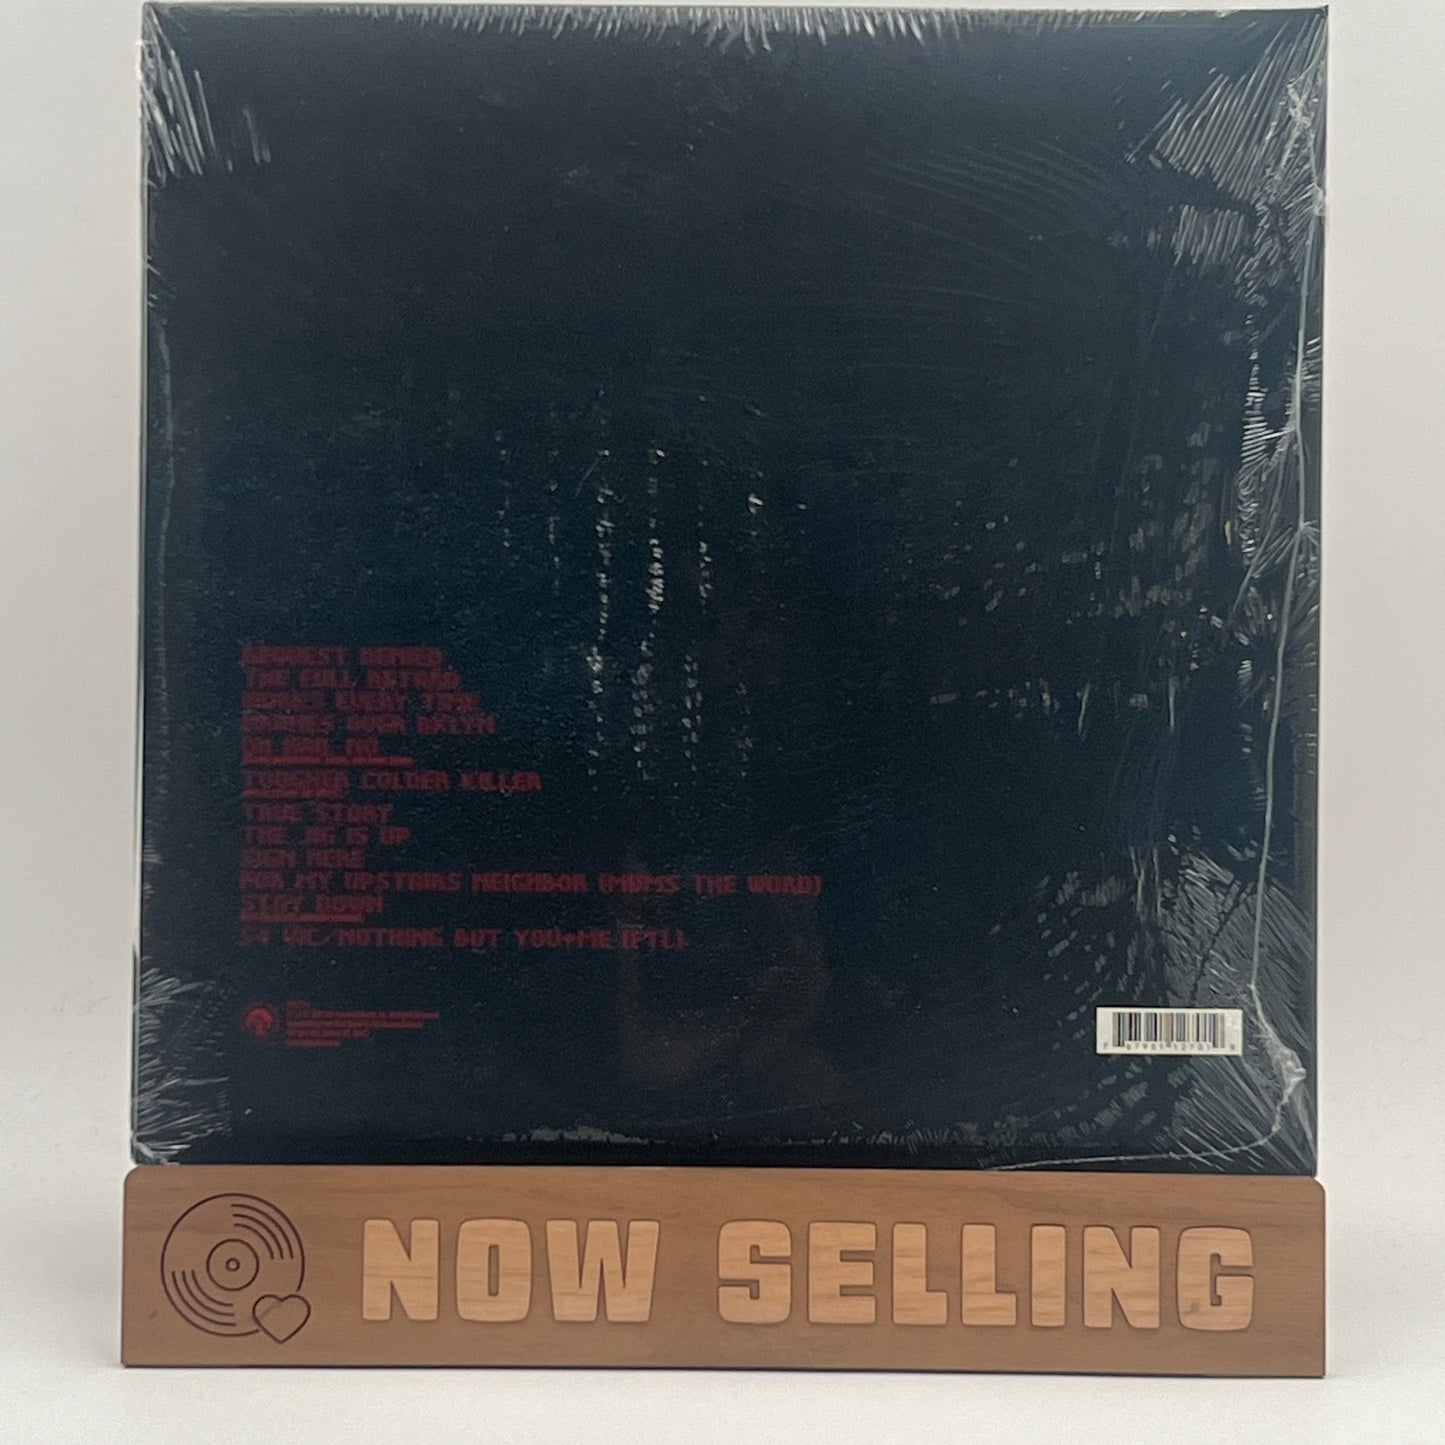 El-P - Cancer 4 Cure Vinyl LP Reissue SEALED